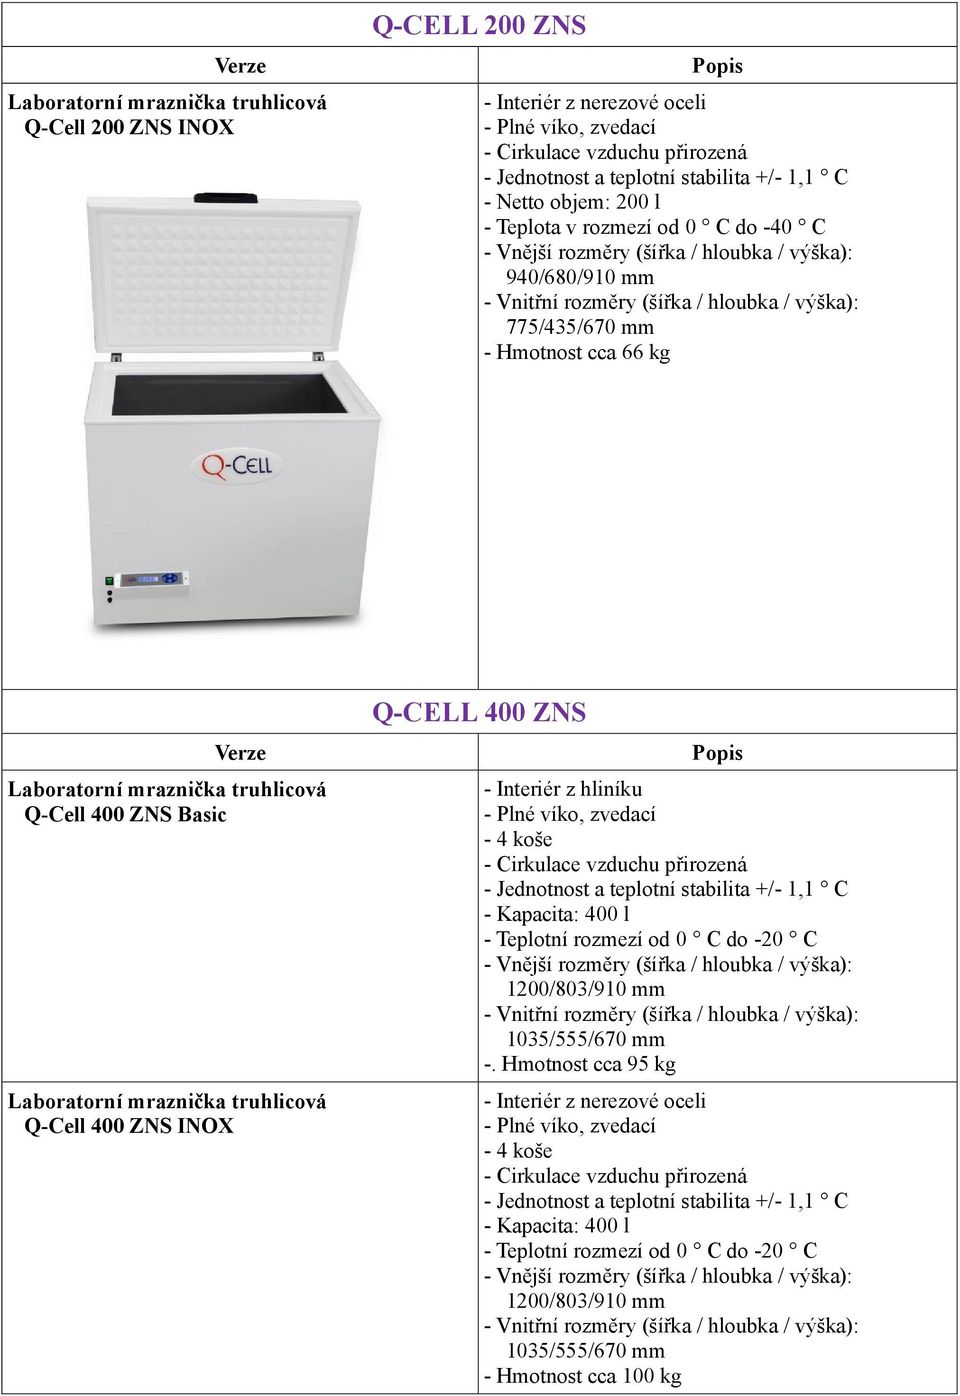 Q-Cell 400 ZNS INOX Q-CELL 400 ZNS - Plné víko, zvedací - 4 koše - Kapacita: 400 l - Teplotní rozmezí od 0 C do -20 C 1200/803/910 mm 1035/555/670 mm